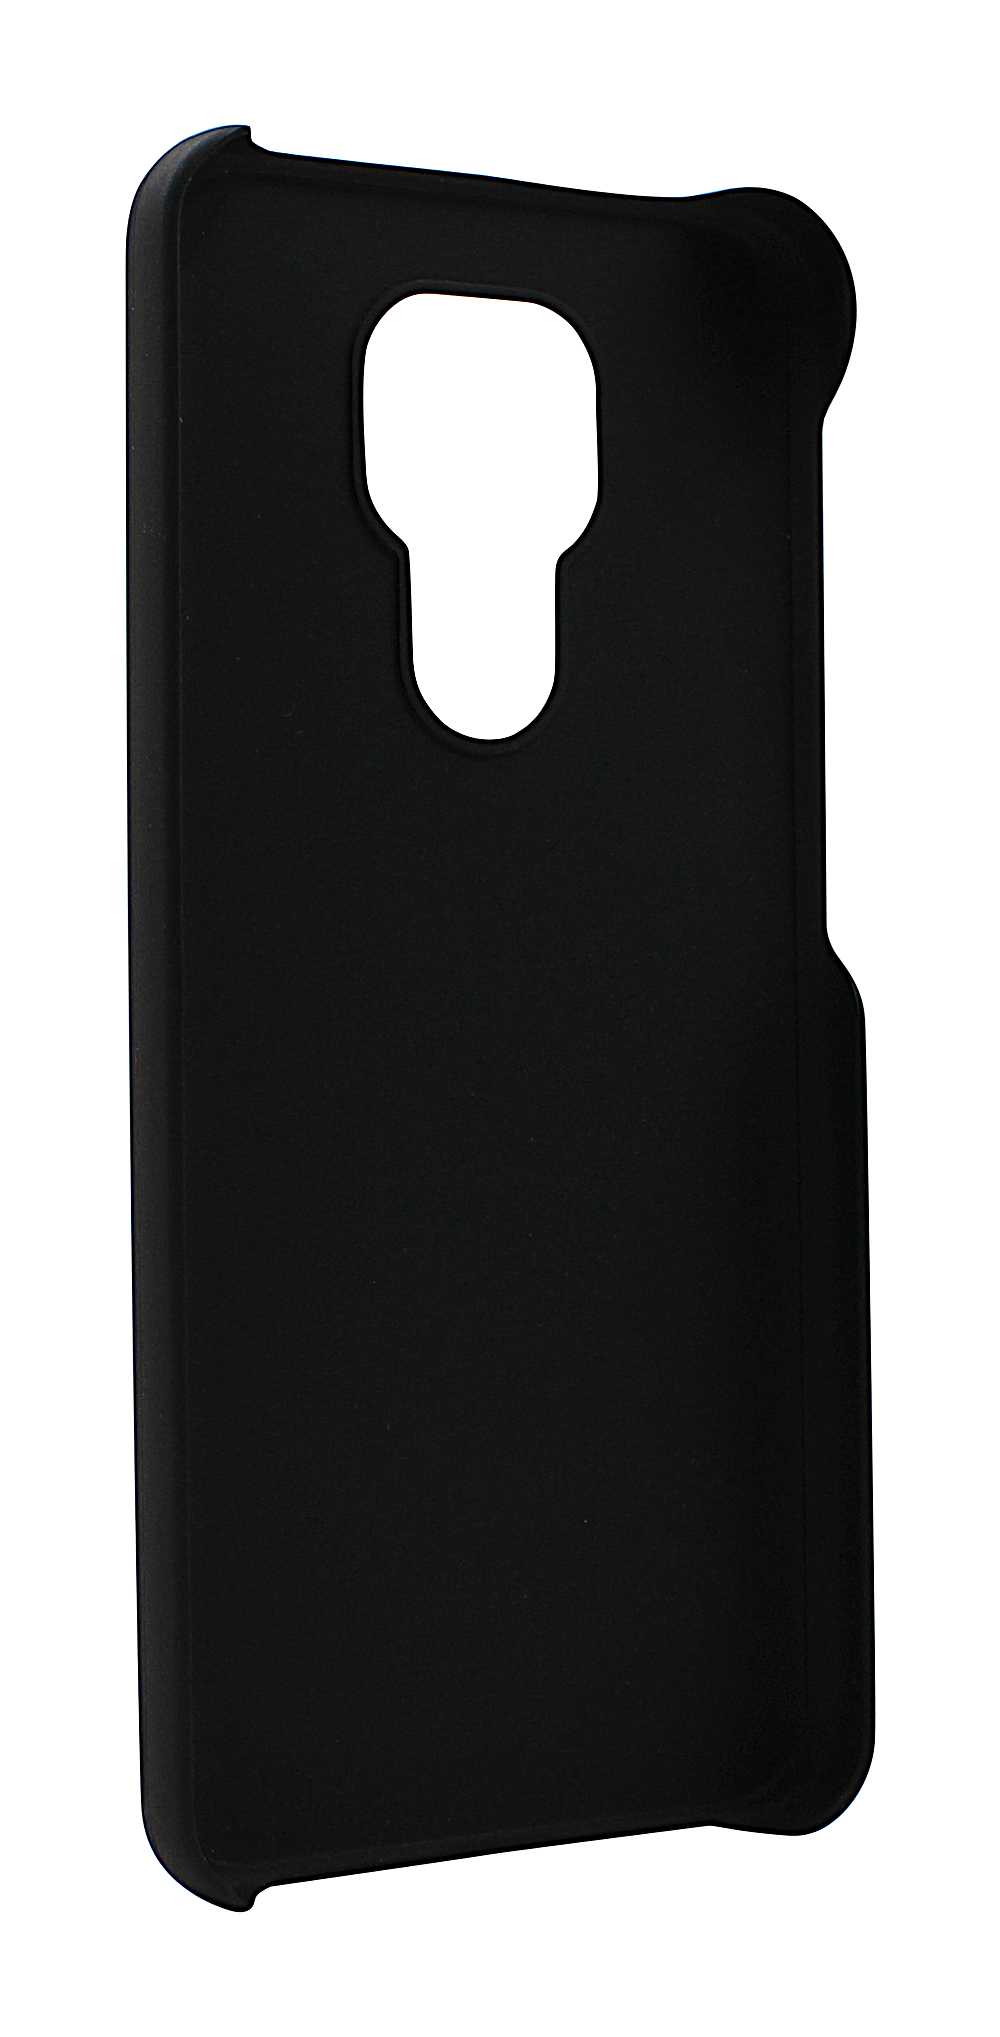 CoverIn Skimblocker Magneettikotelo Motorola Moto E7 Plus (XT2081-2)